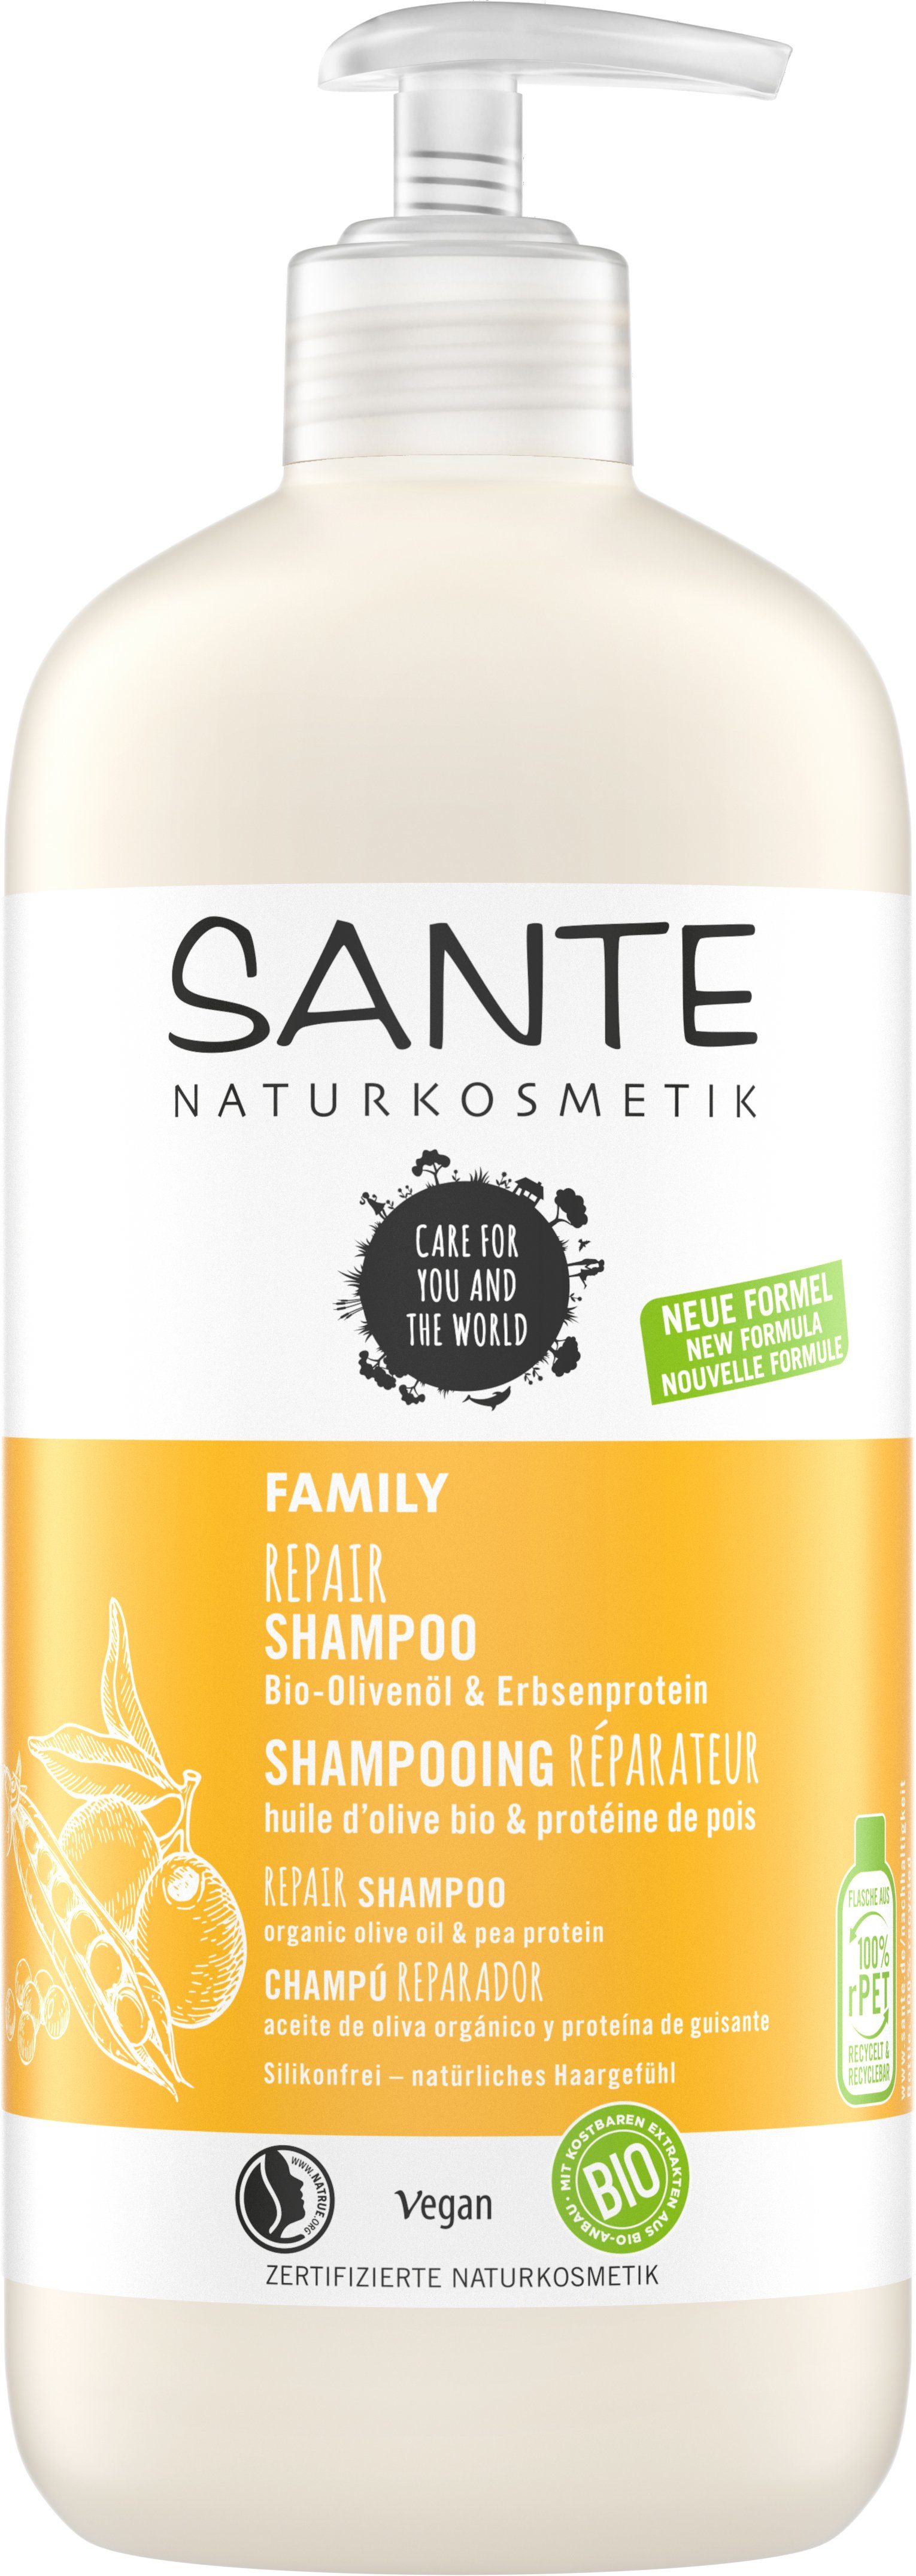 SANTE Repair FAMILY Haarshampoo Bio-Olivenöl